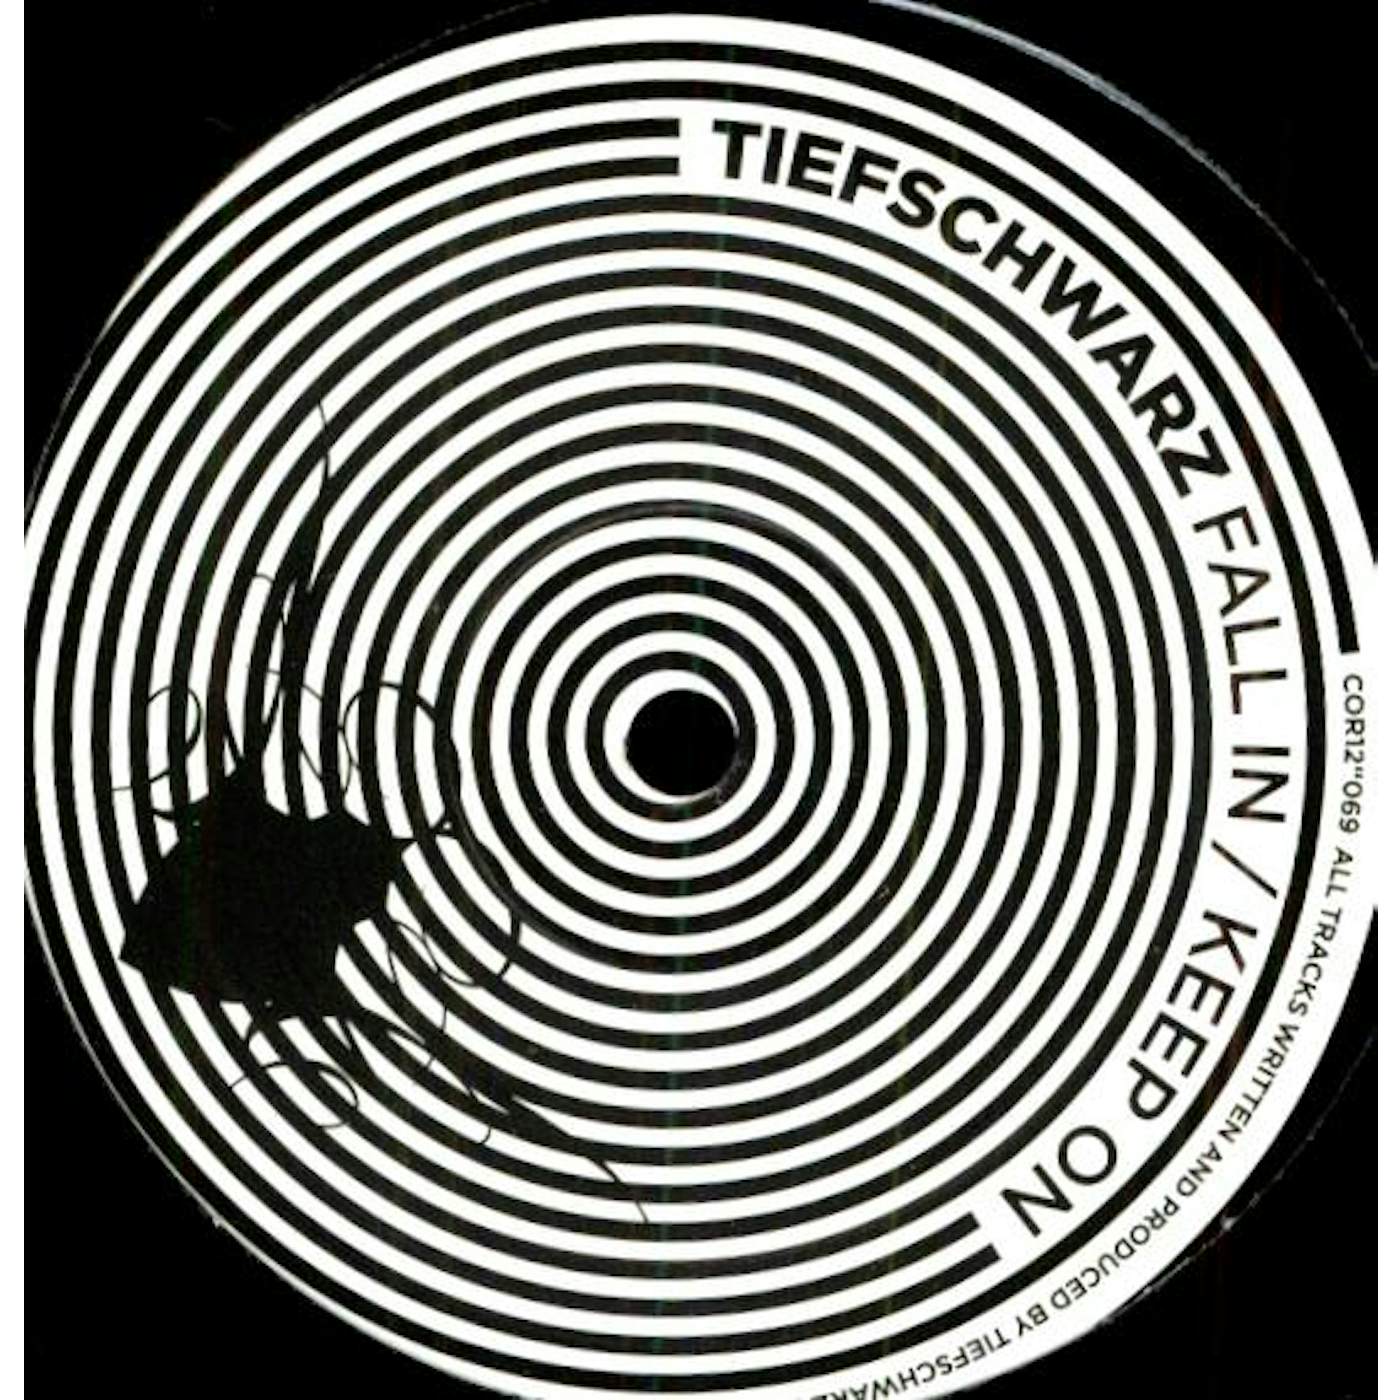 Tiefschwarz FALL IN & KEEP ON Vinyl Record